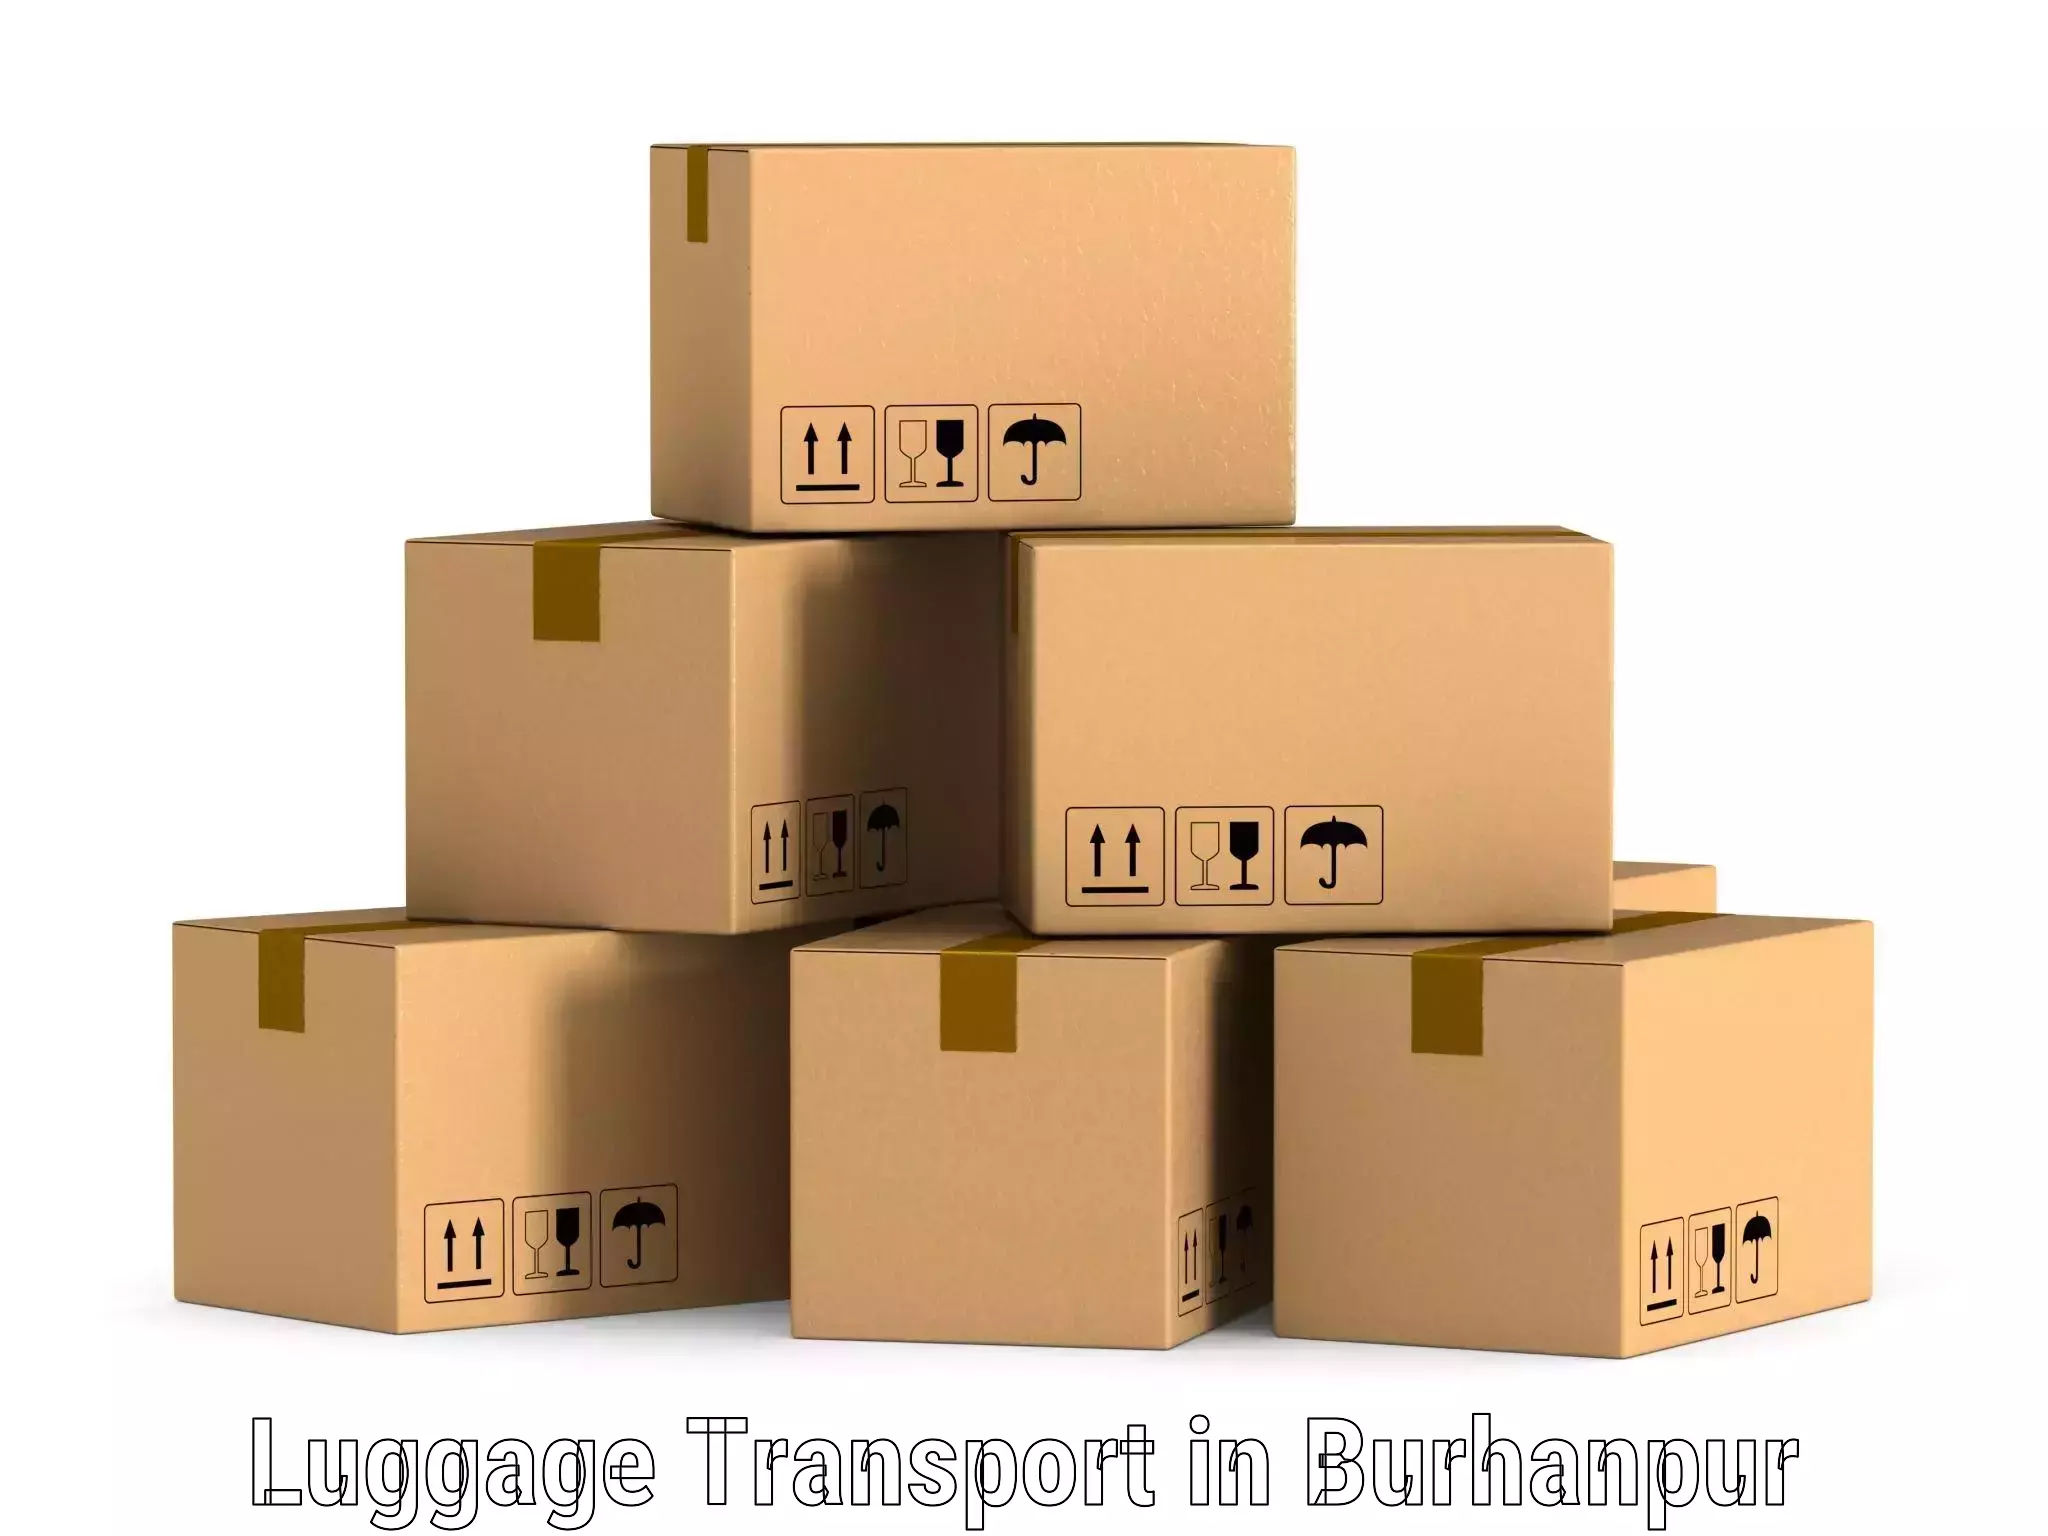 Corporate baggage transport in Burhanpur